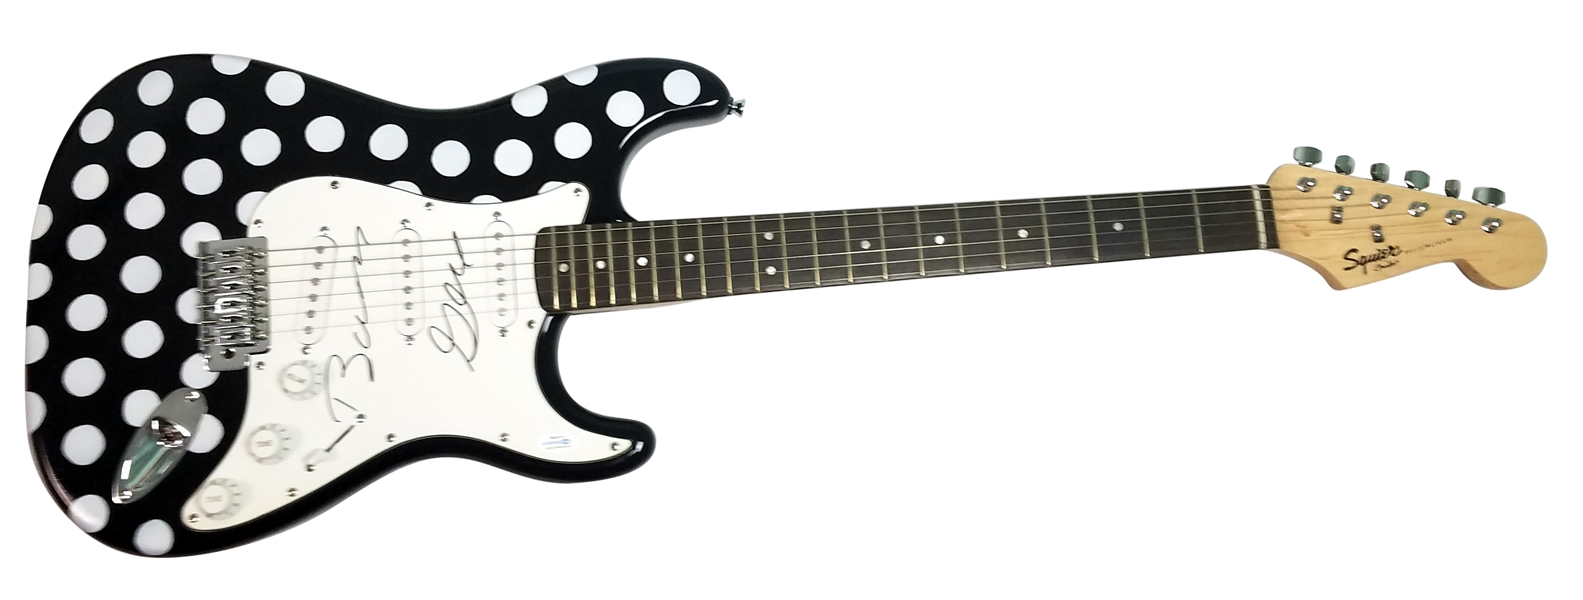 Buddy Guy Signed Fender Squier Stratocaster Guitar (ACOA)